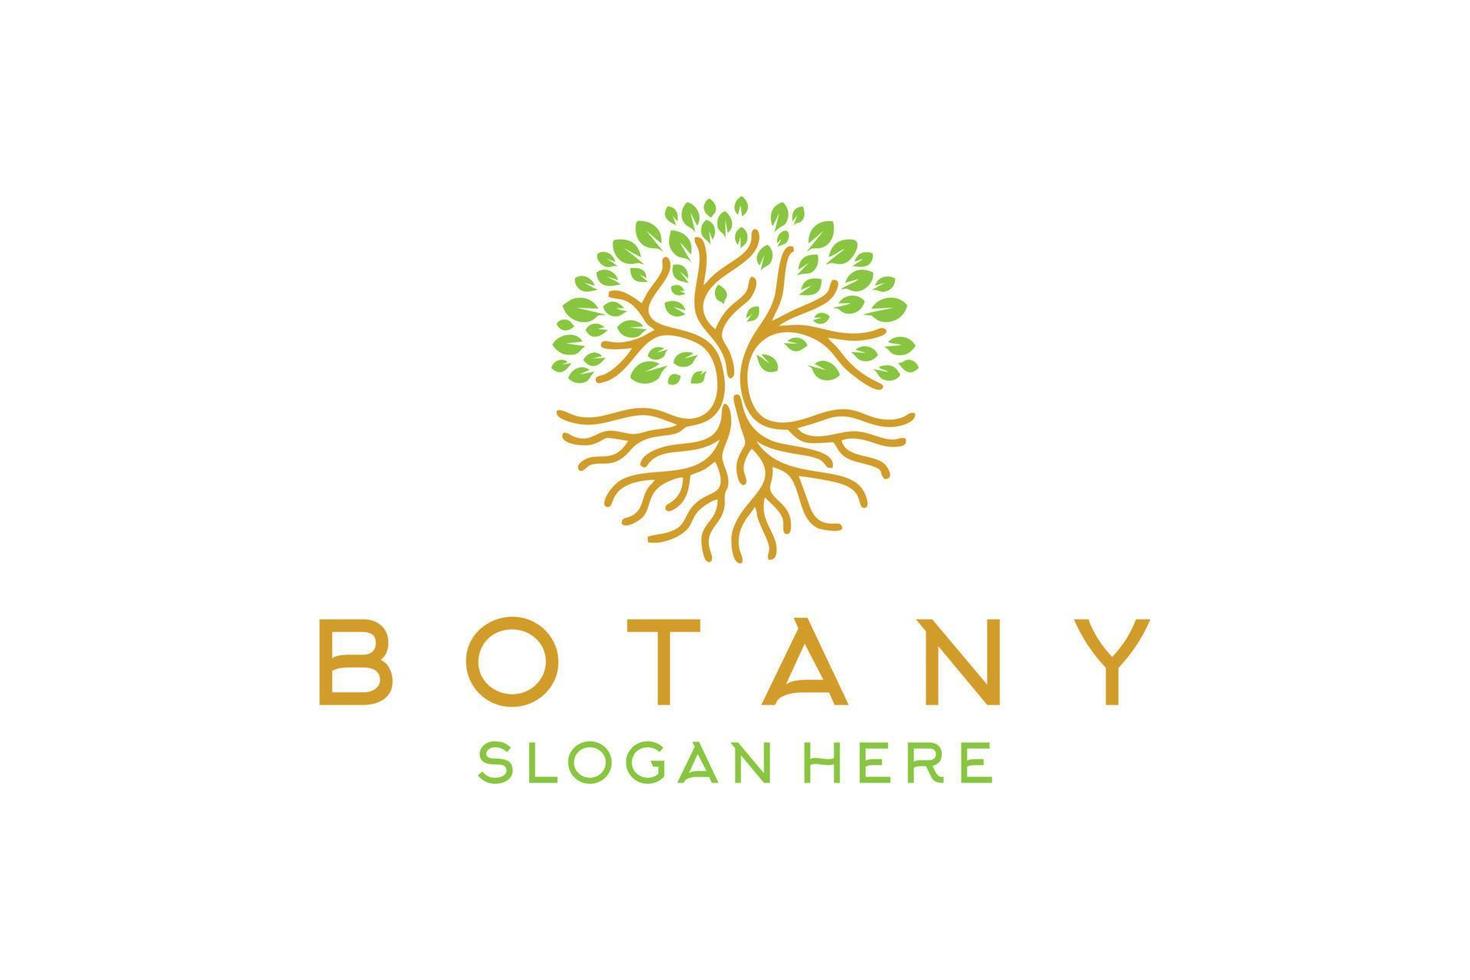 Botany ecology root tree logo design vector